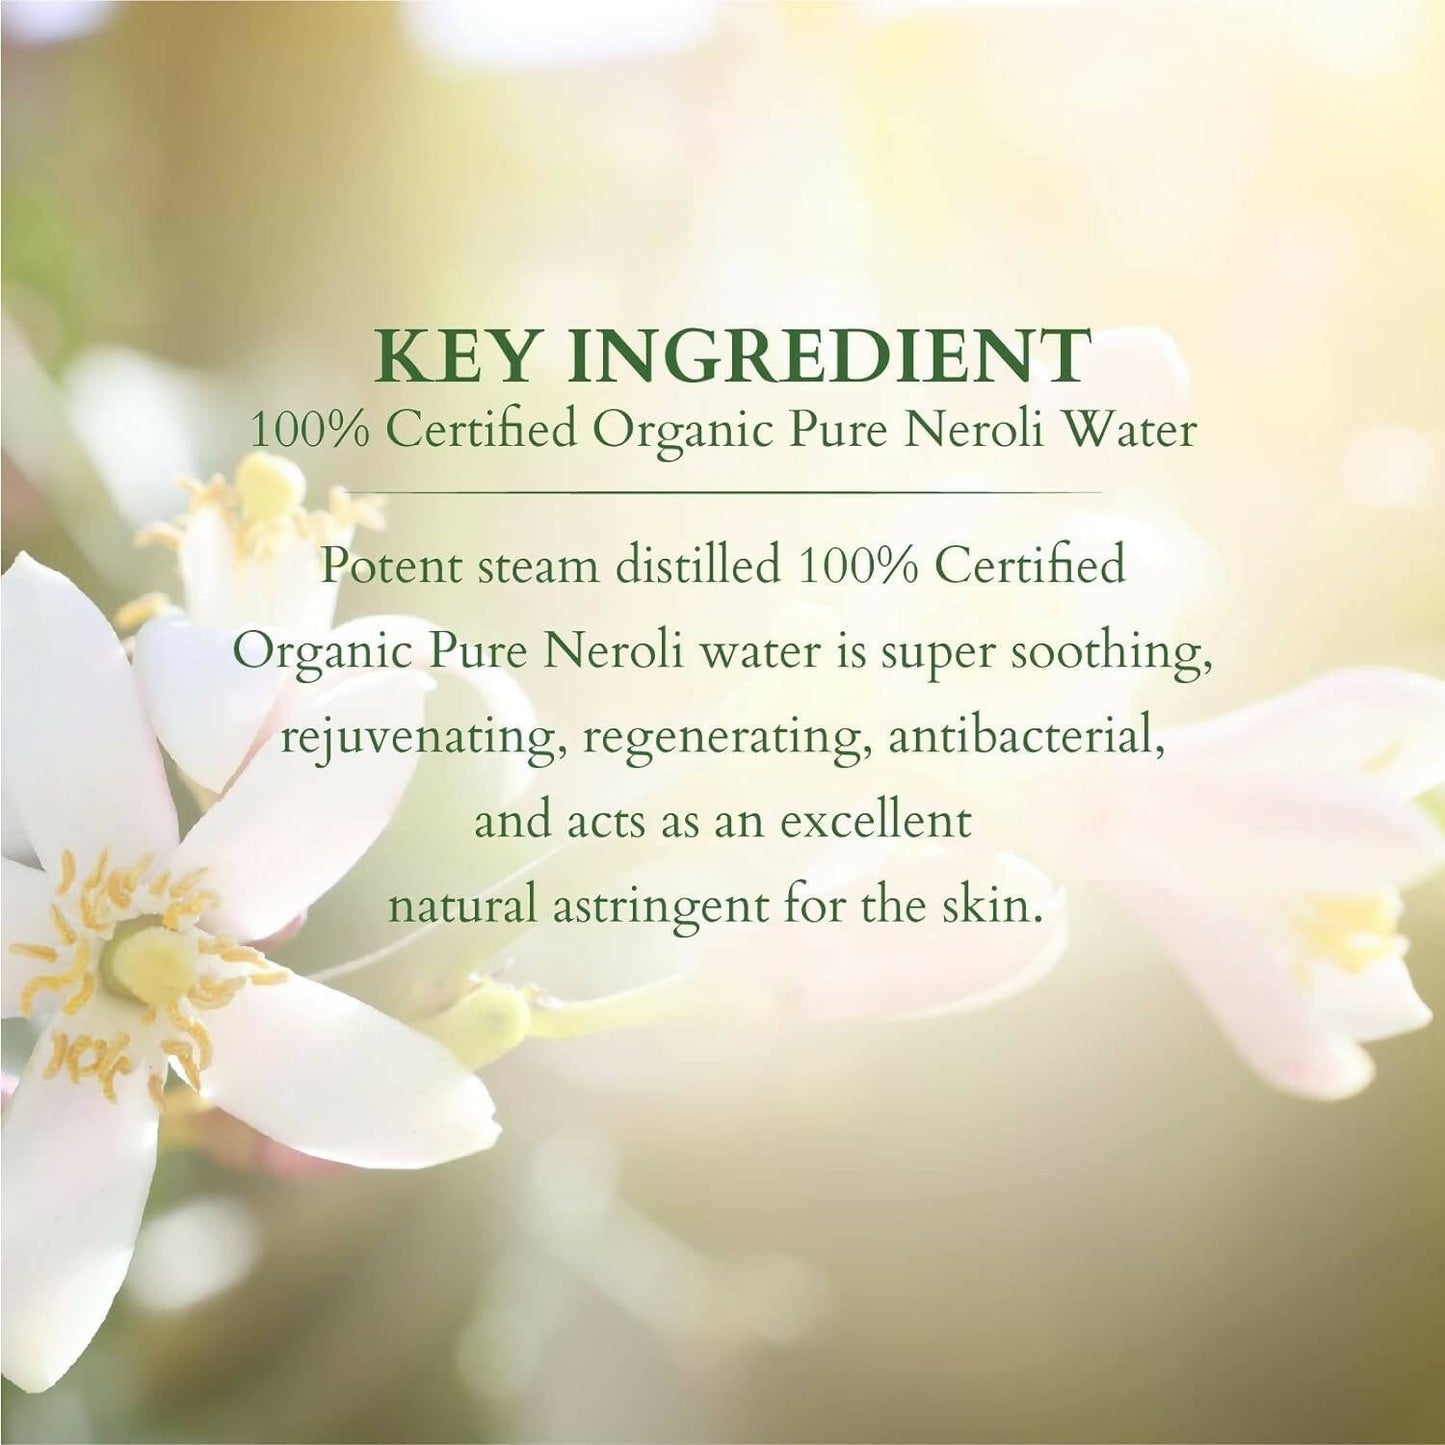 Lotus Organics+ 100% Pure Neroli Floral Water